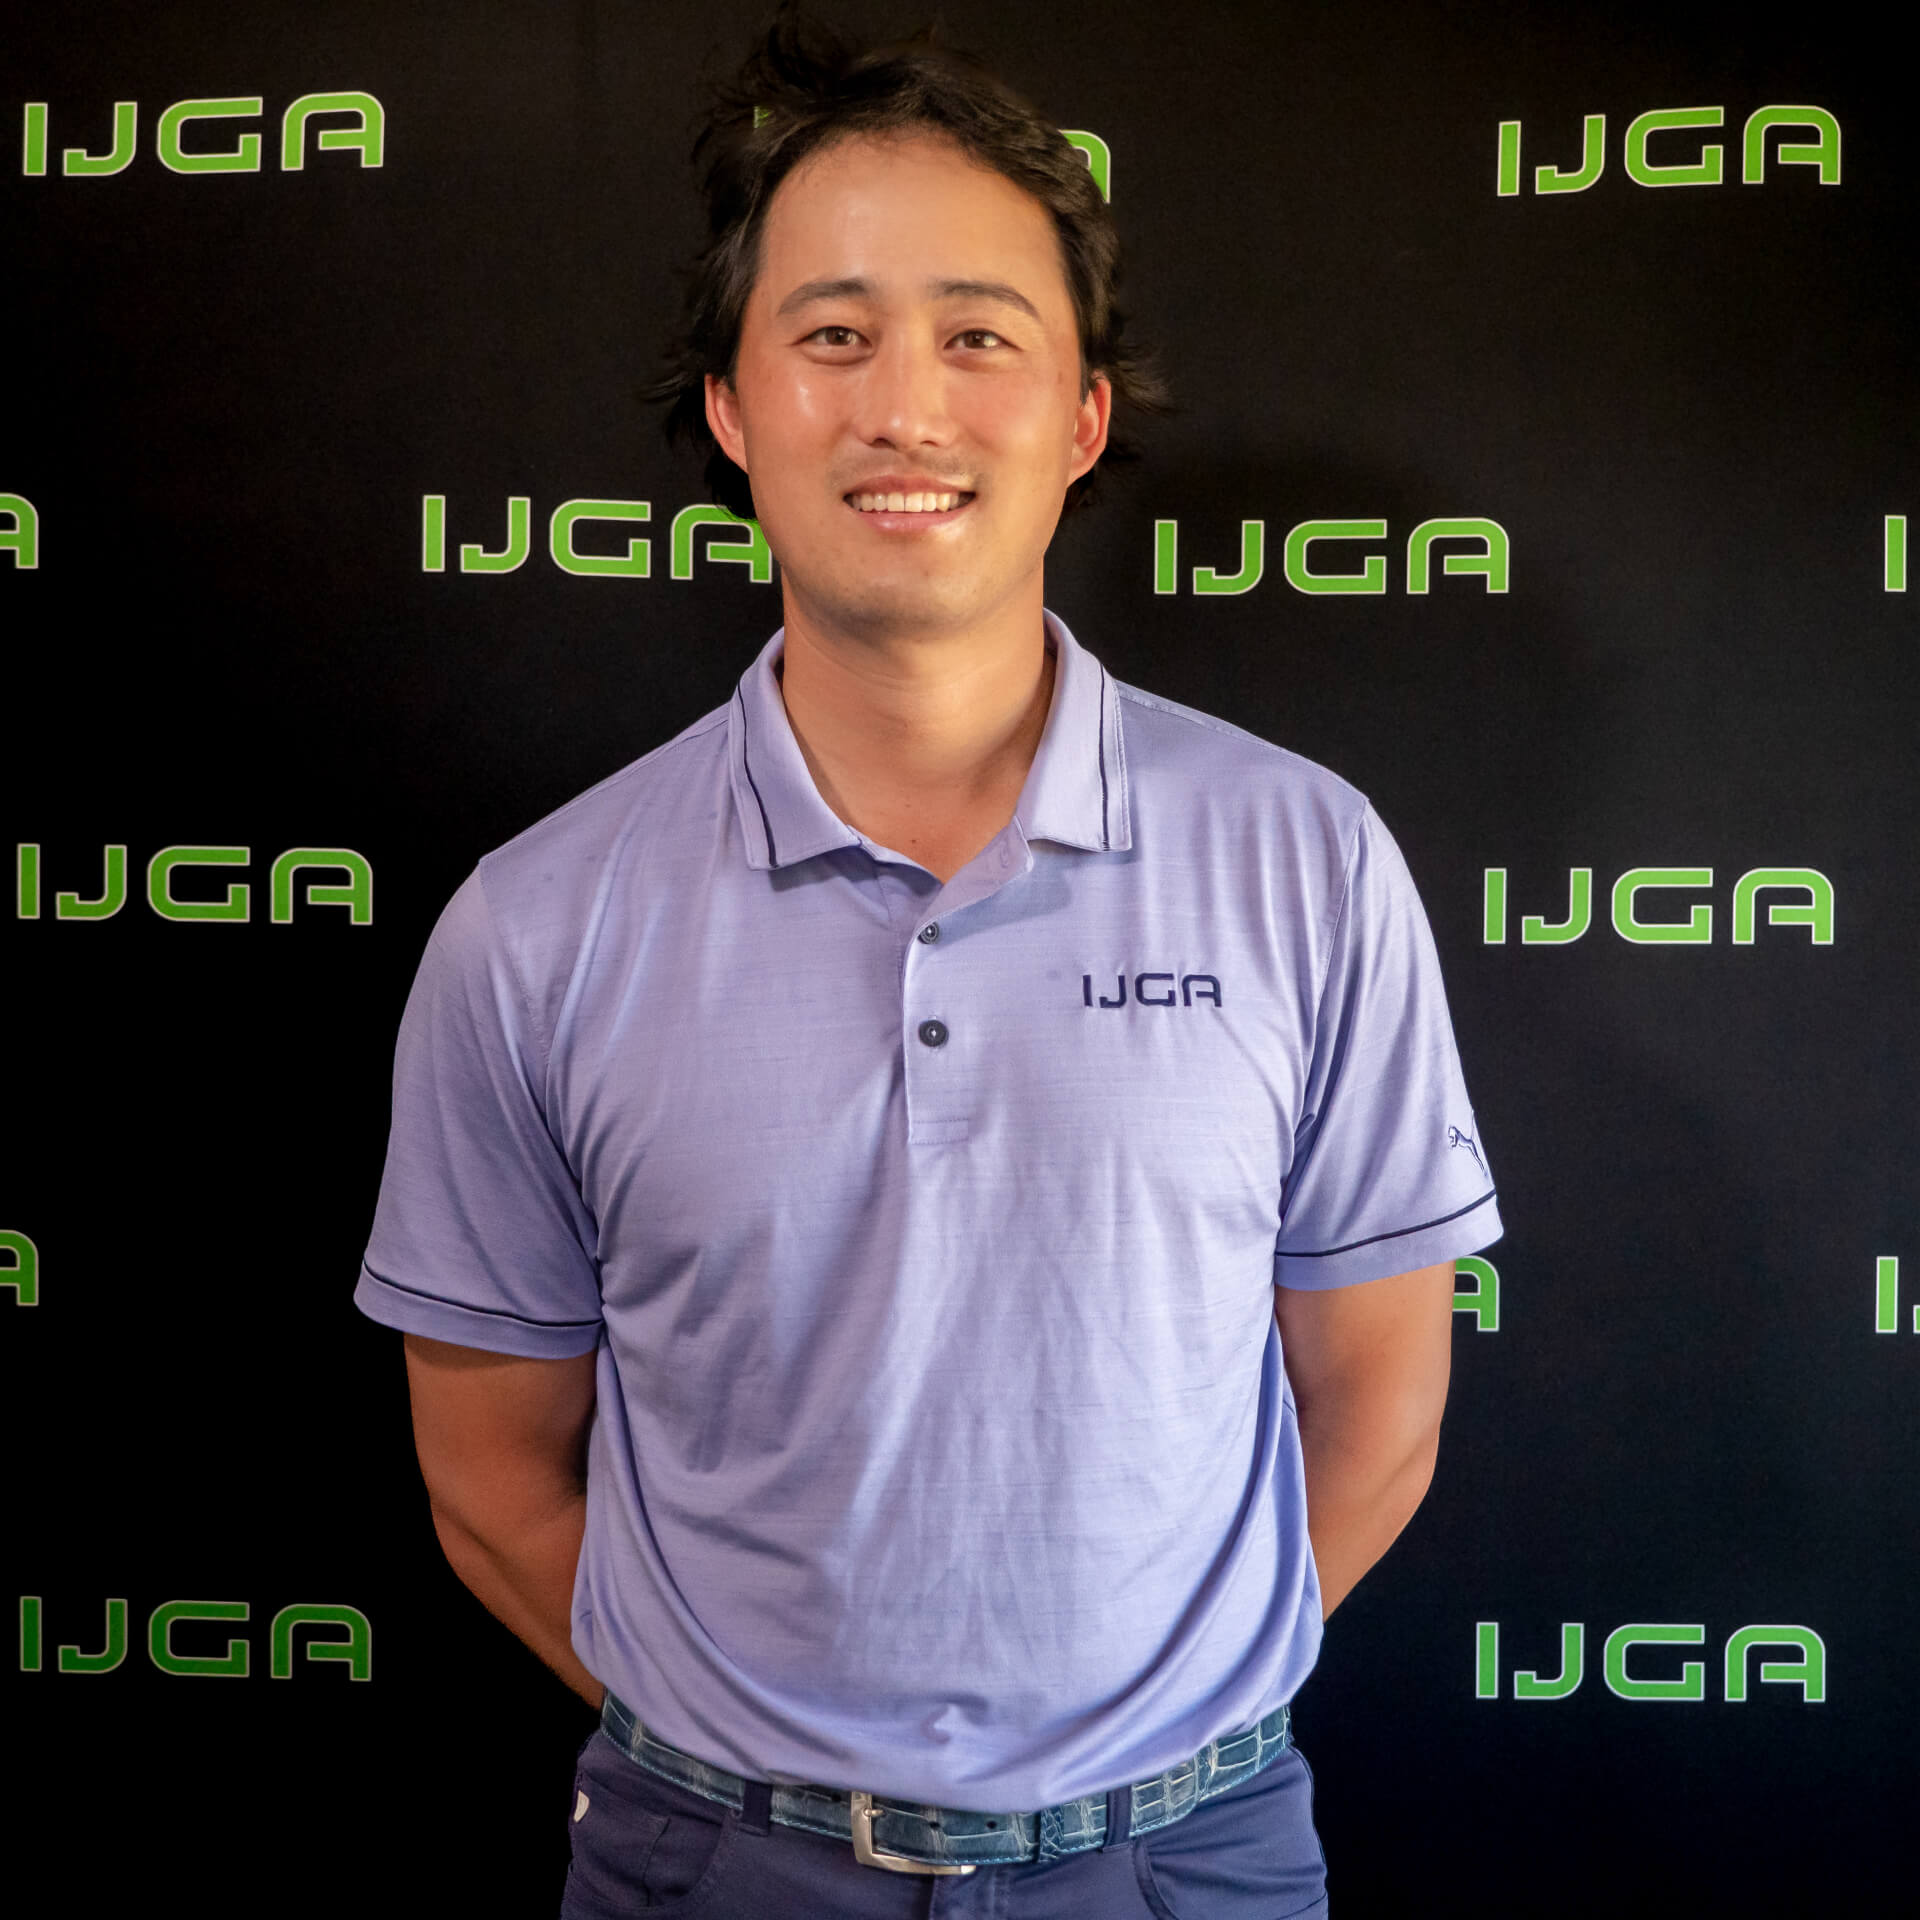 IJGA coach David Chong, smiles against a black IJGA logo background